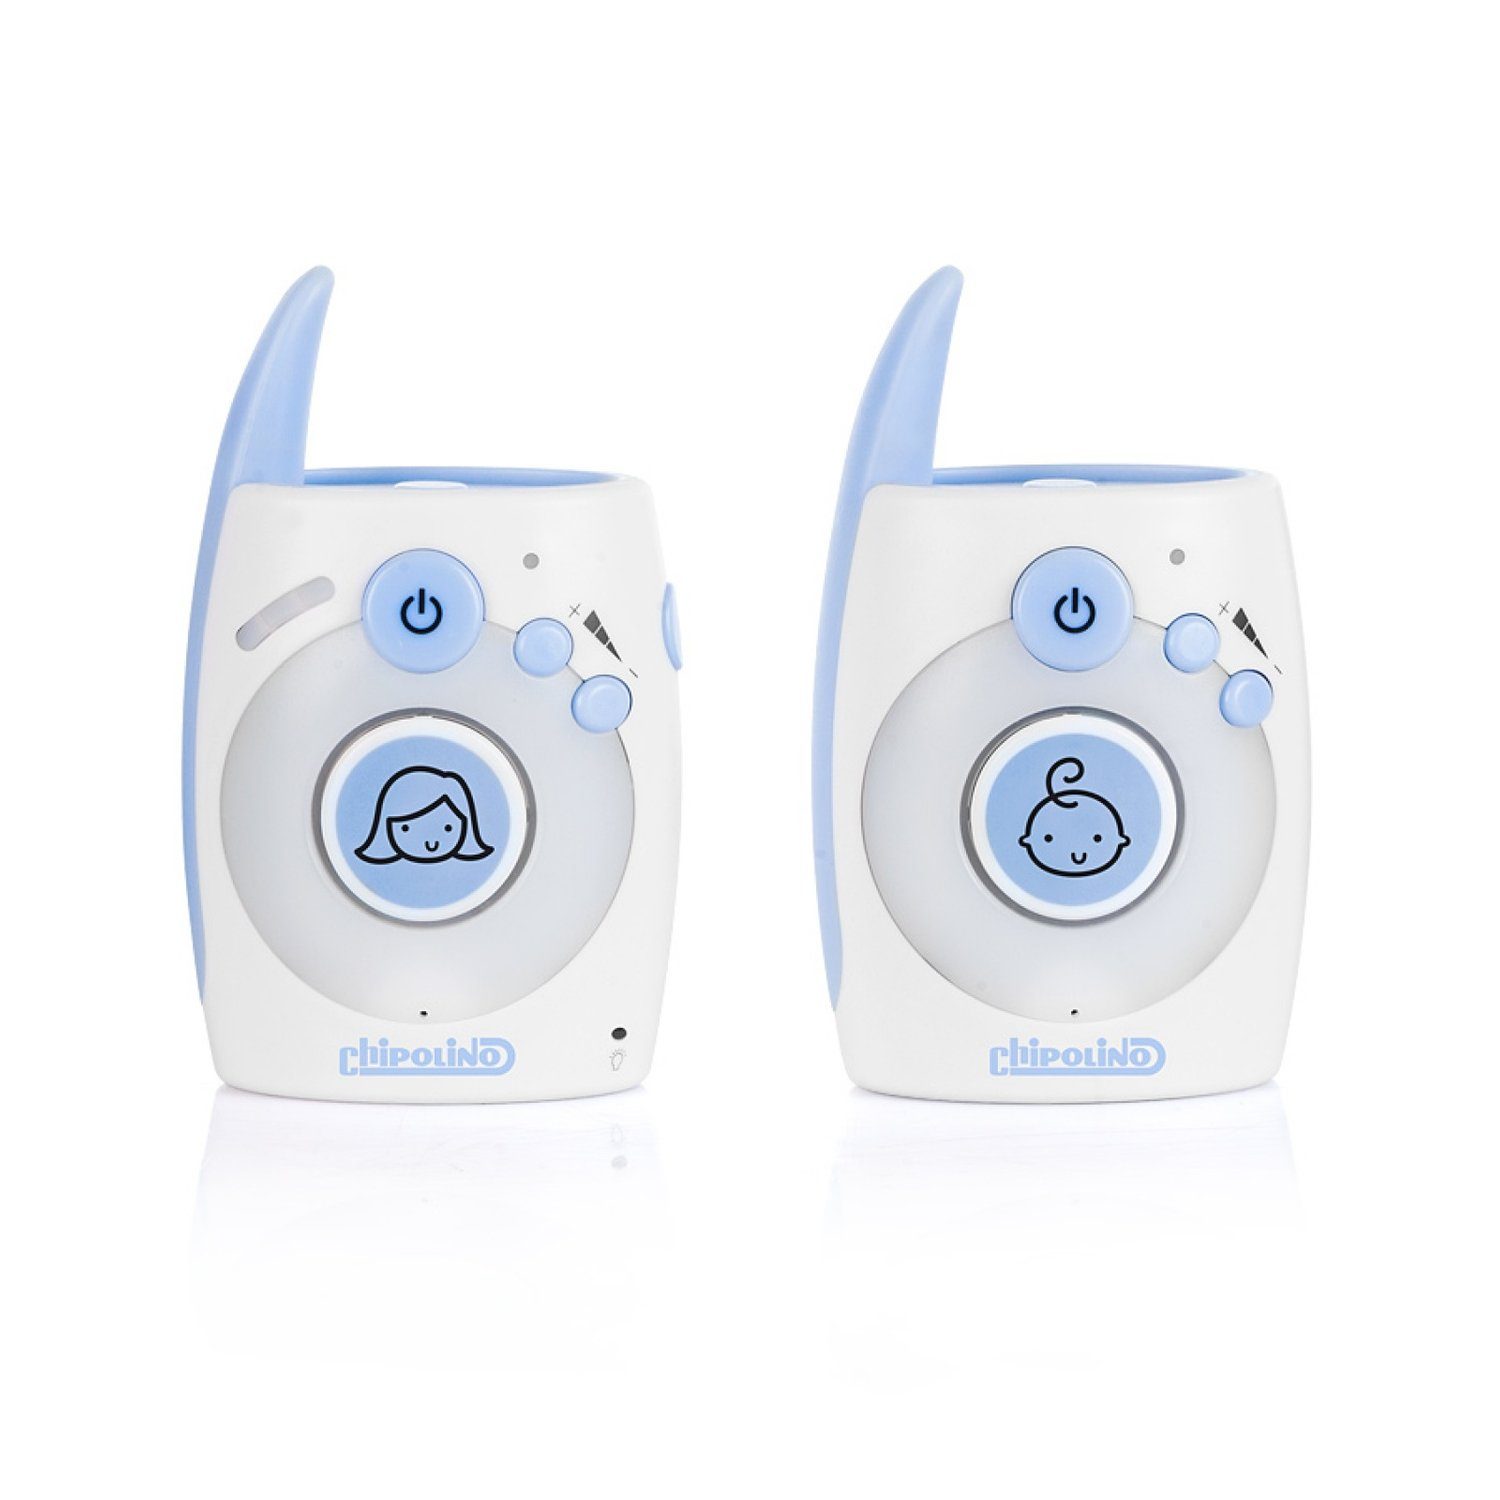 Chipolino Babyphone Babyphone Reichweite, Zweiwege-Kommunikation, Astro Adapter m USB-Adapter, 300 blau USB